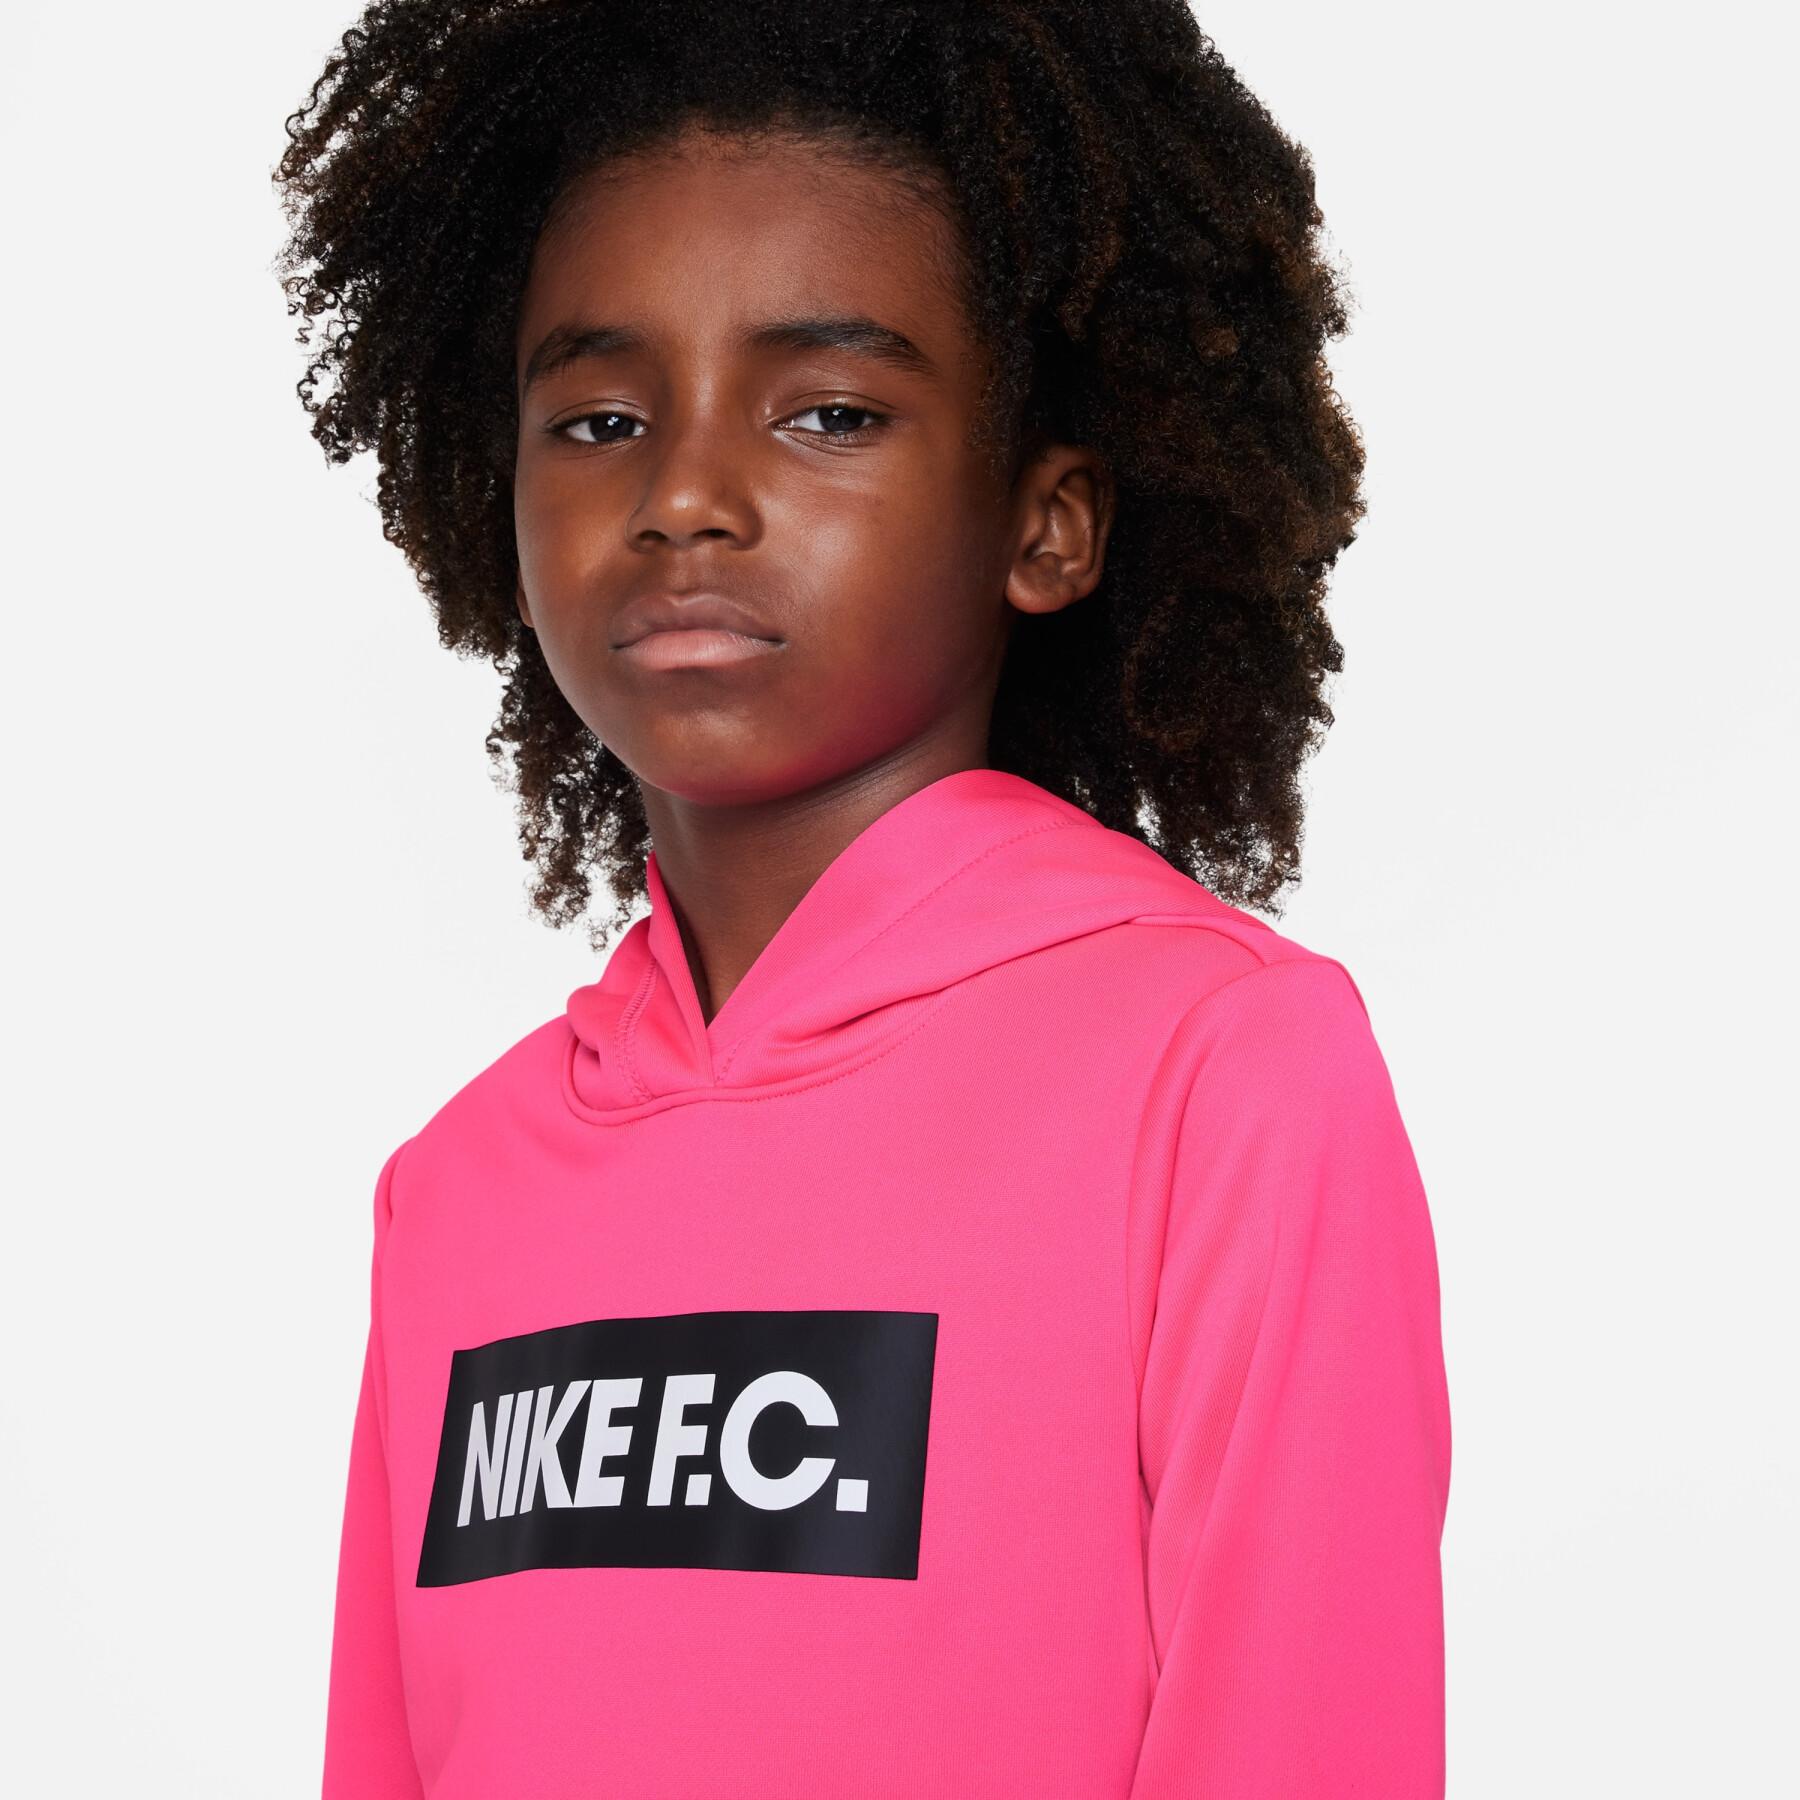 Sudadera con capucha para niños Nike Dri-Fit Fc Libero